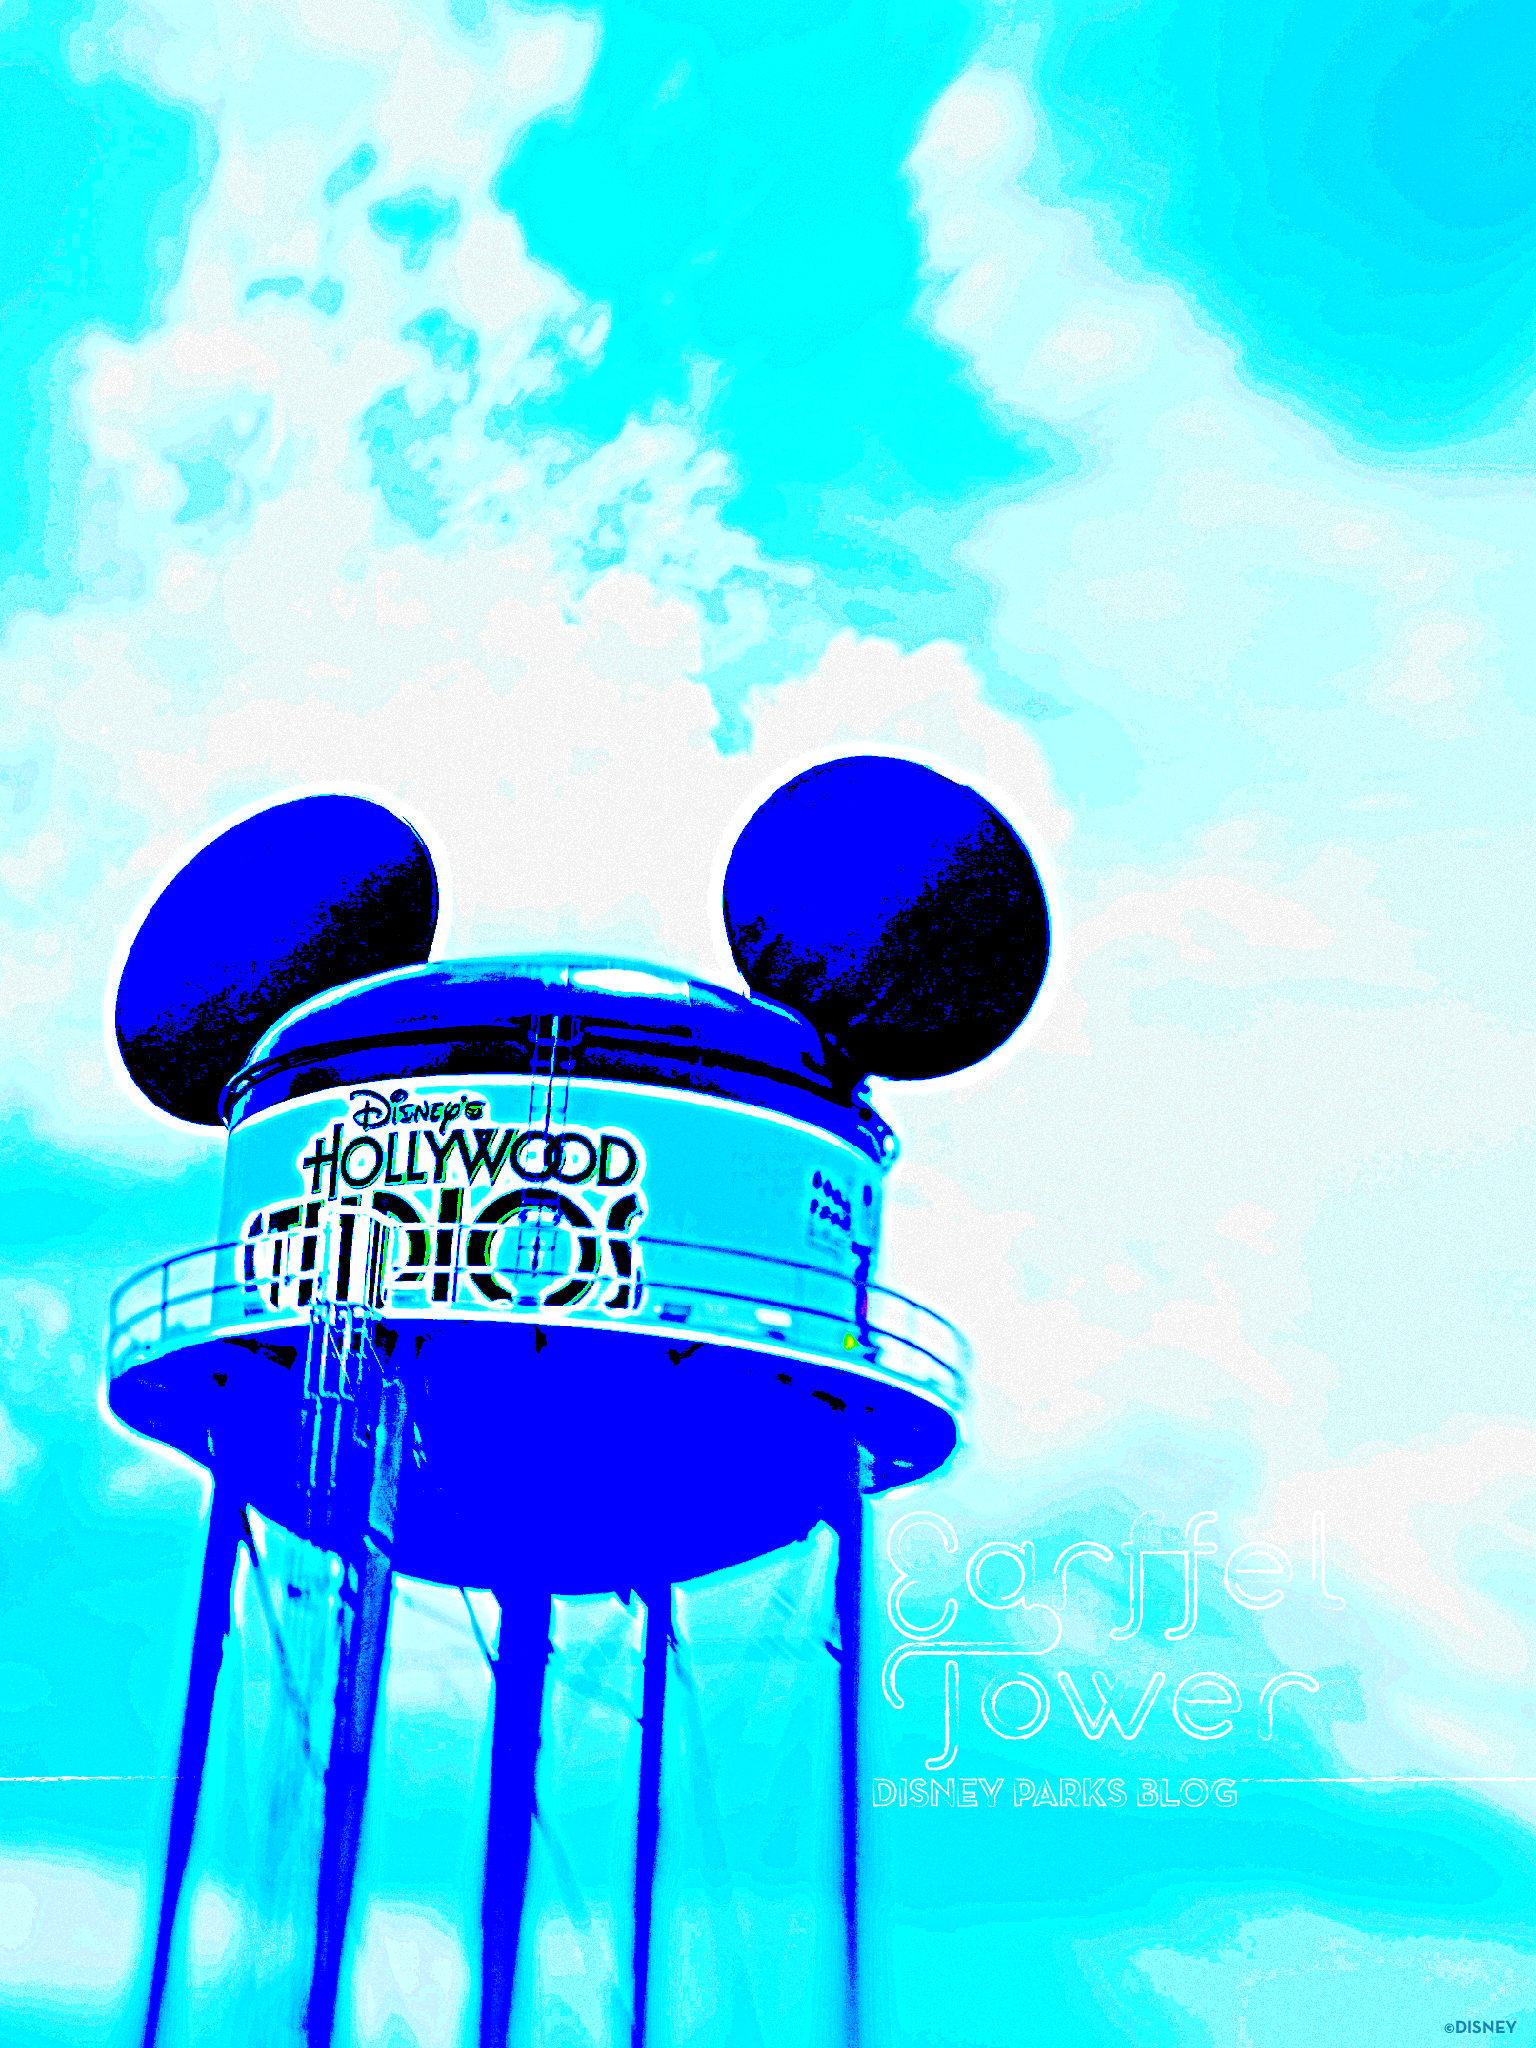 Earffel Tower at Disneys Hollywood Studios